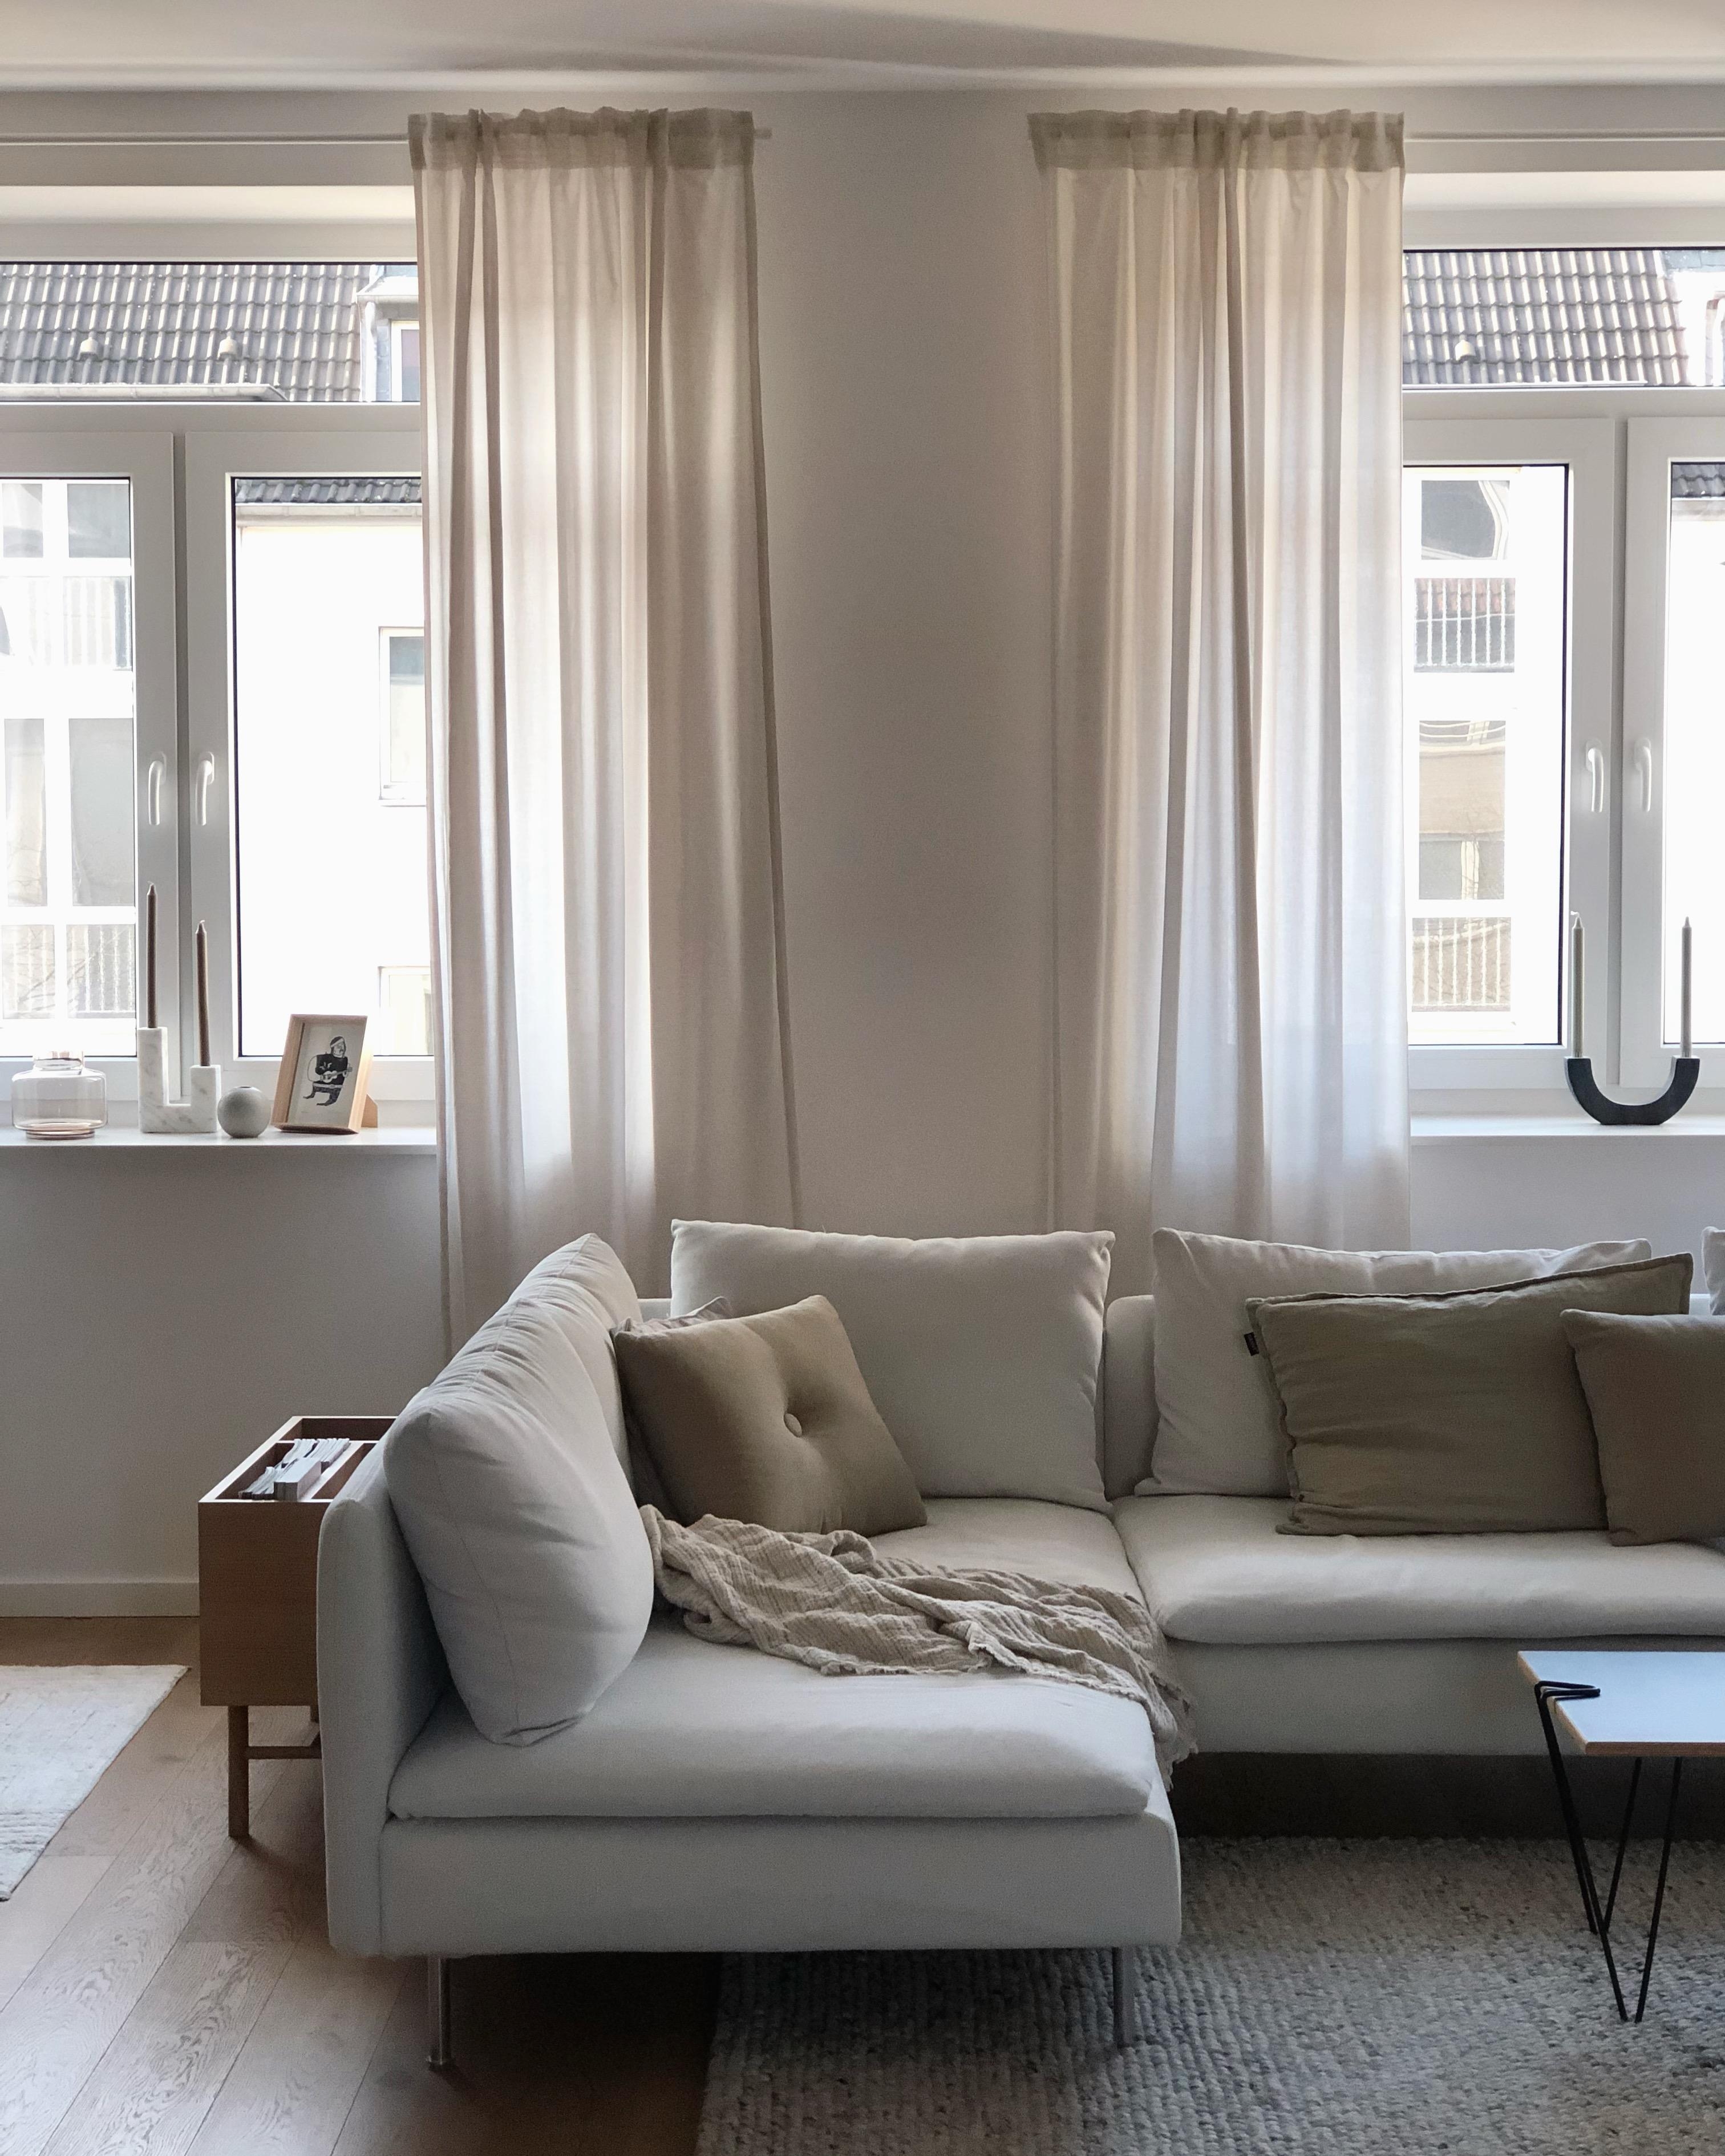 #wohnzimmer #livingroom #cozy #home #hygge #couch #couchstyle #plantbox #nordicliving #skandinavisch #skandi #interior